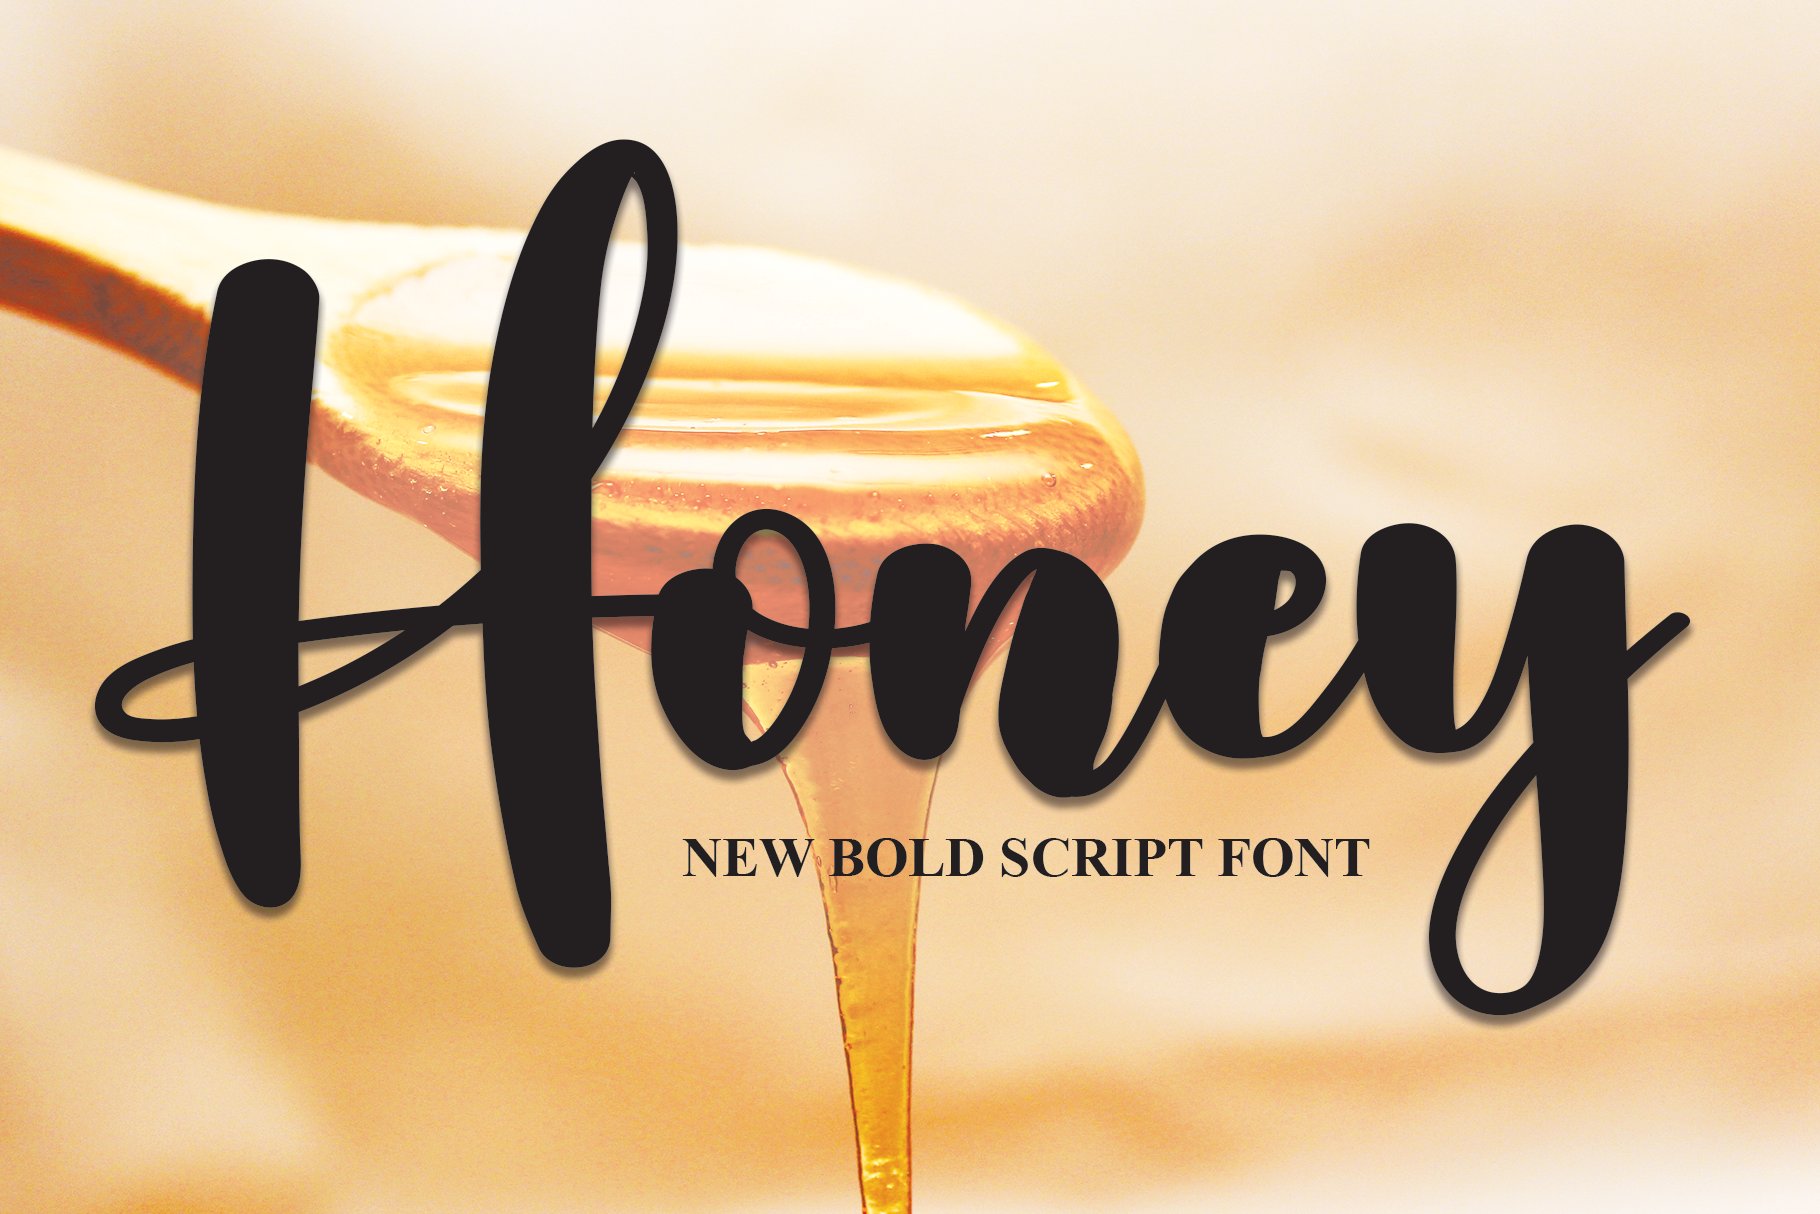 Honey | Script Font cover image.